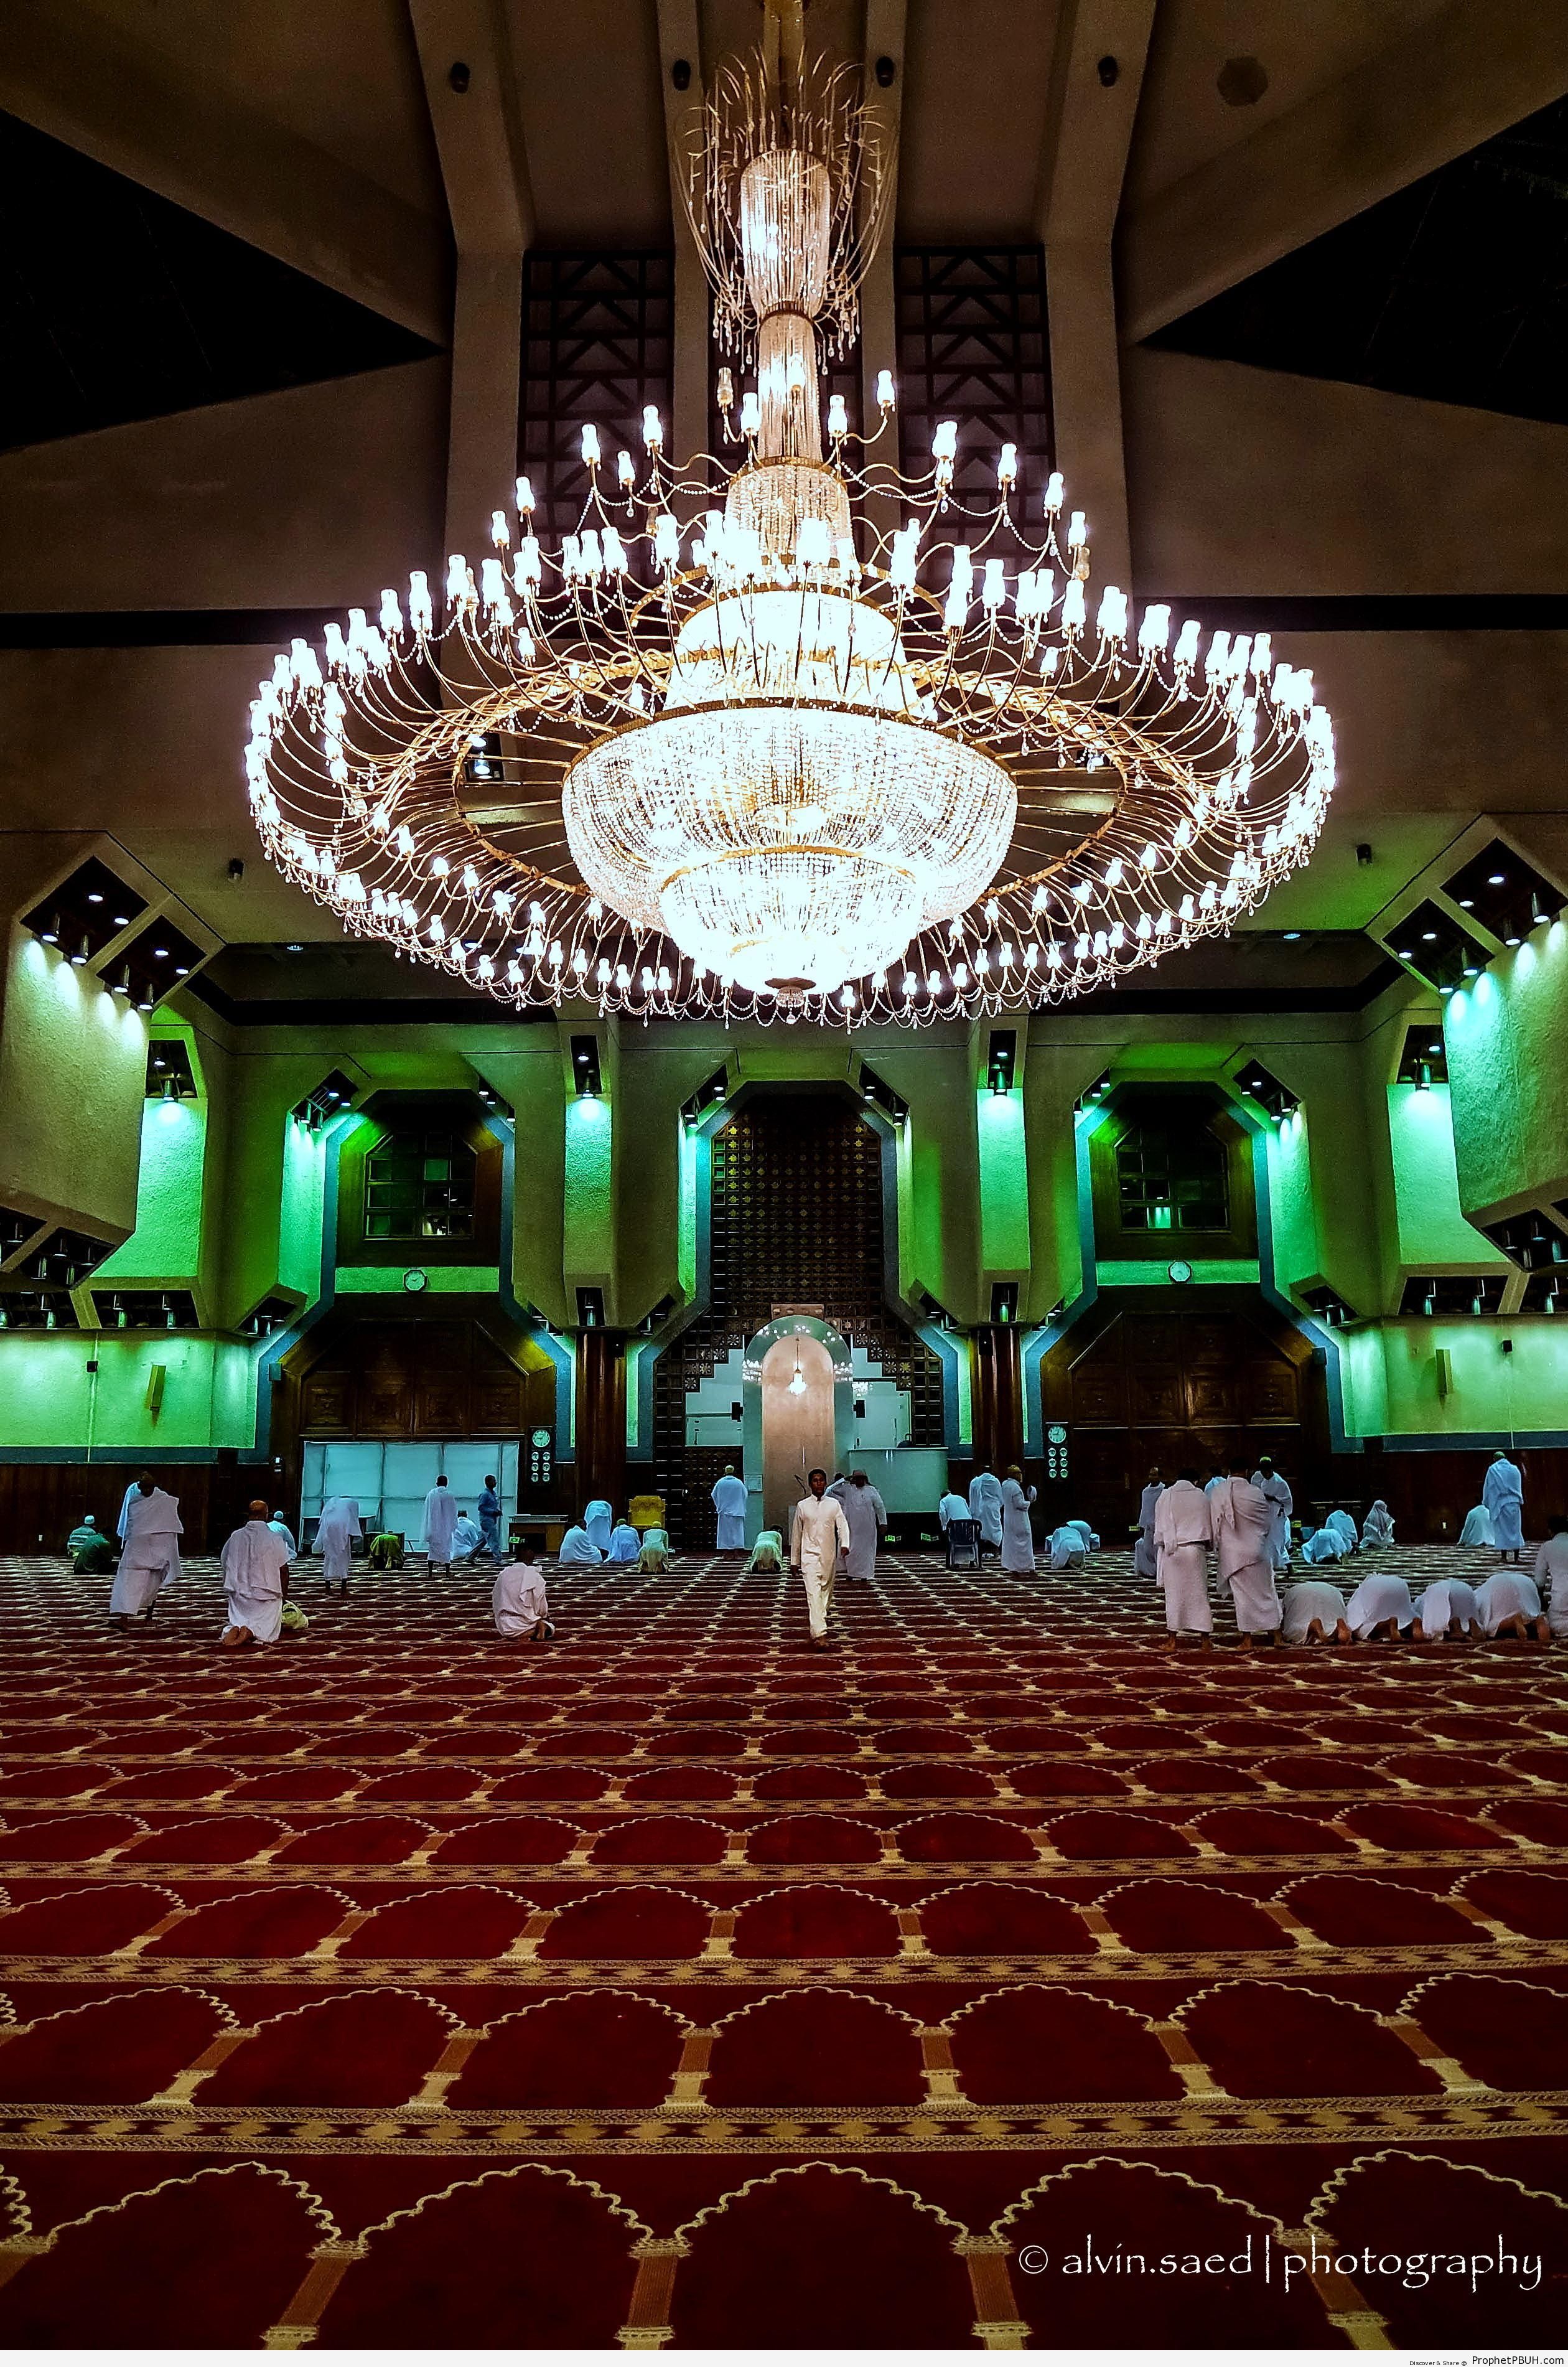 Masjid at-Taneem (Masjid Aisha) in Makkah, Saudi Arabia - Artist- Alvin A. Saed -Picture